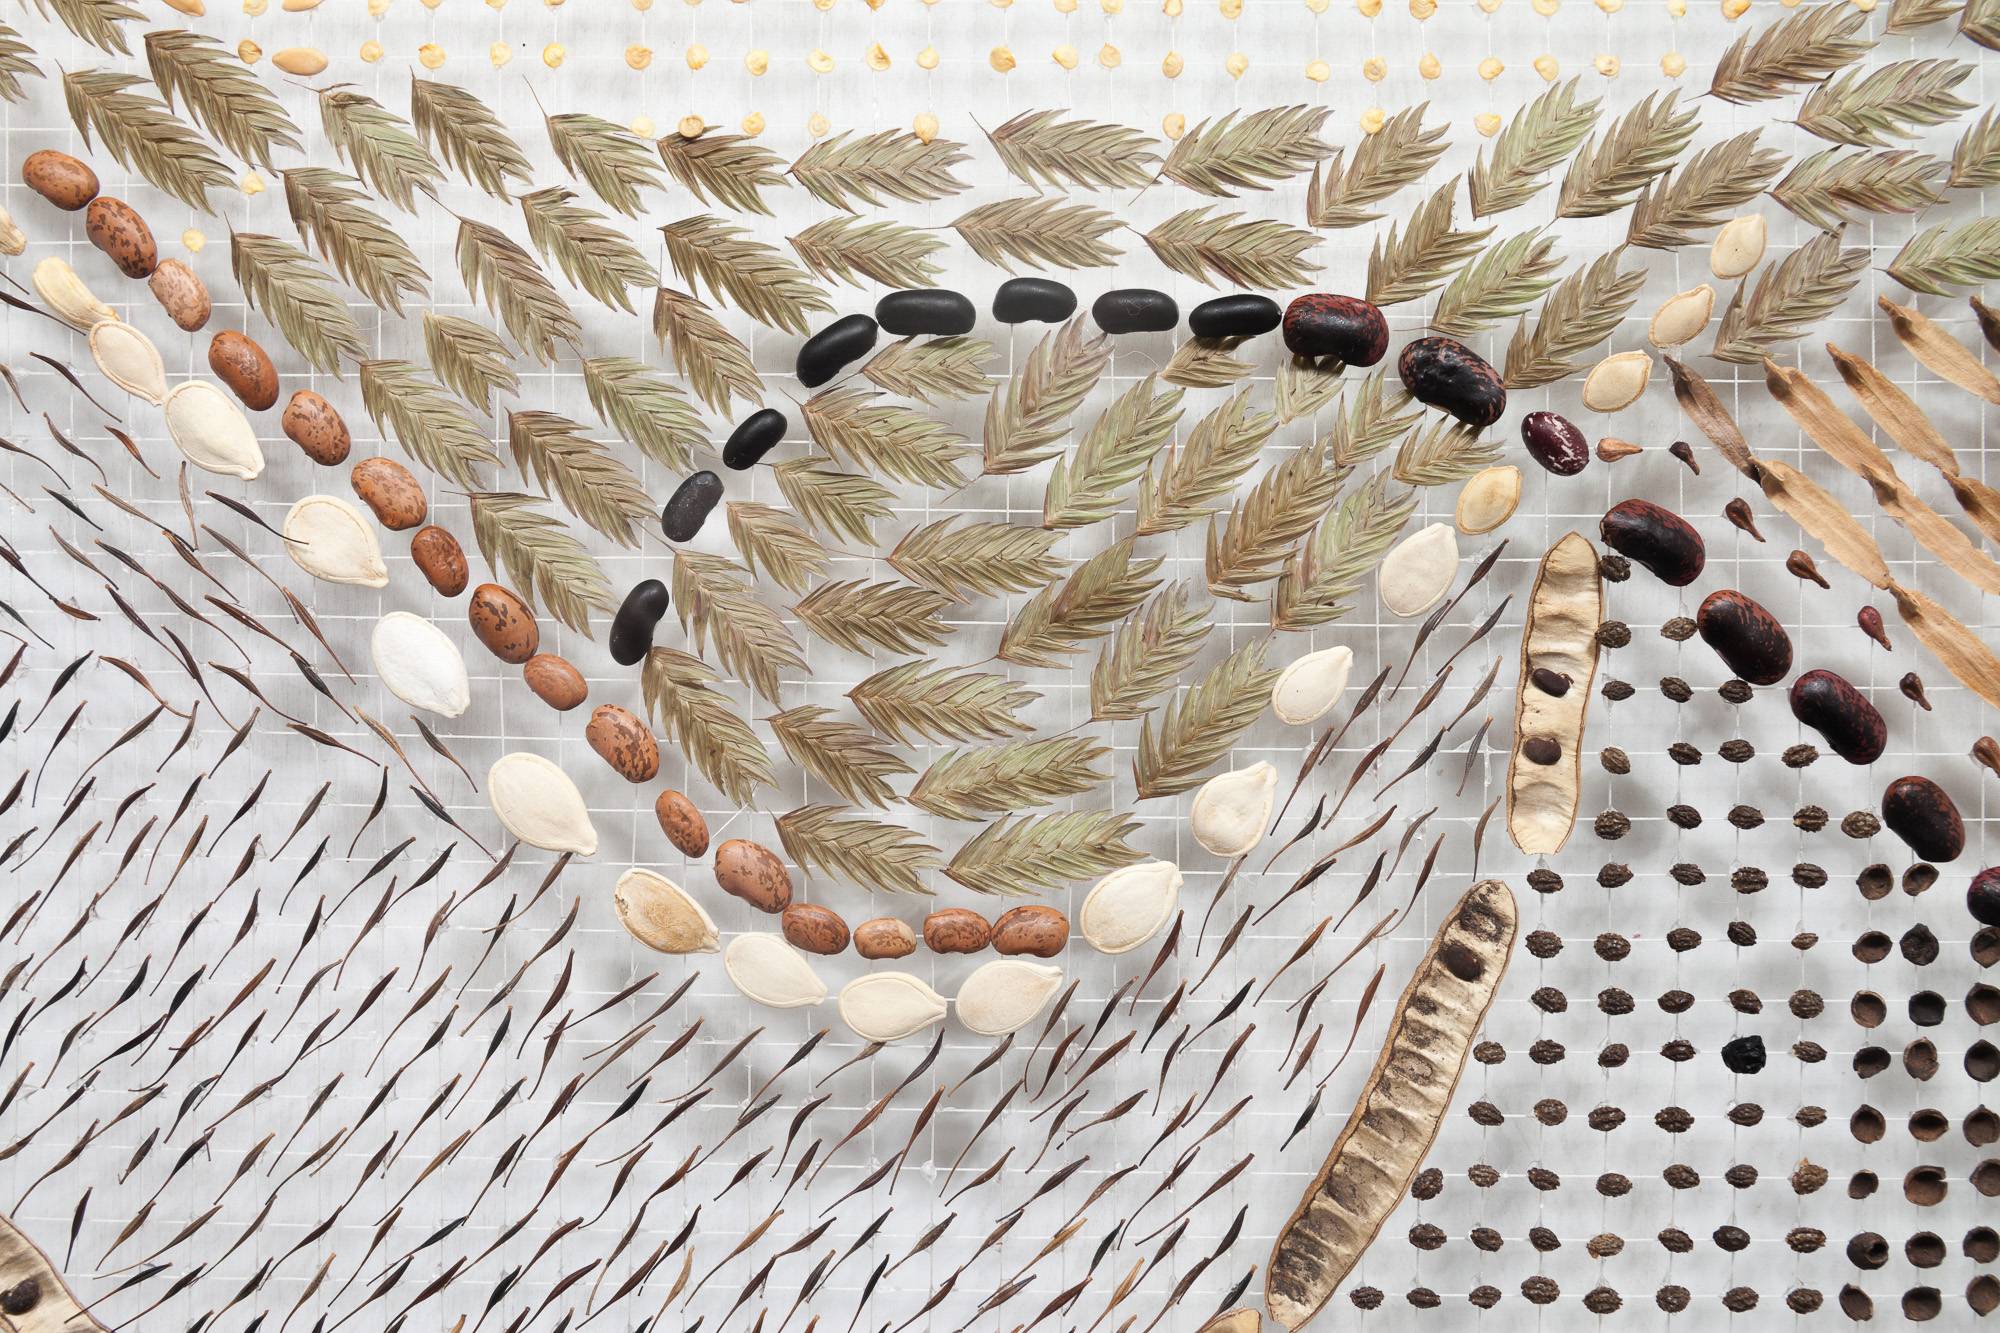 detail of seeds arranged on string grid